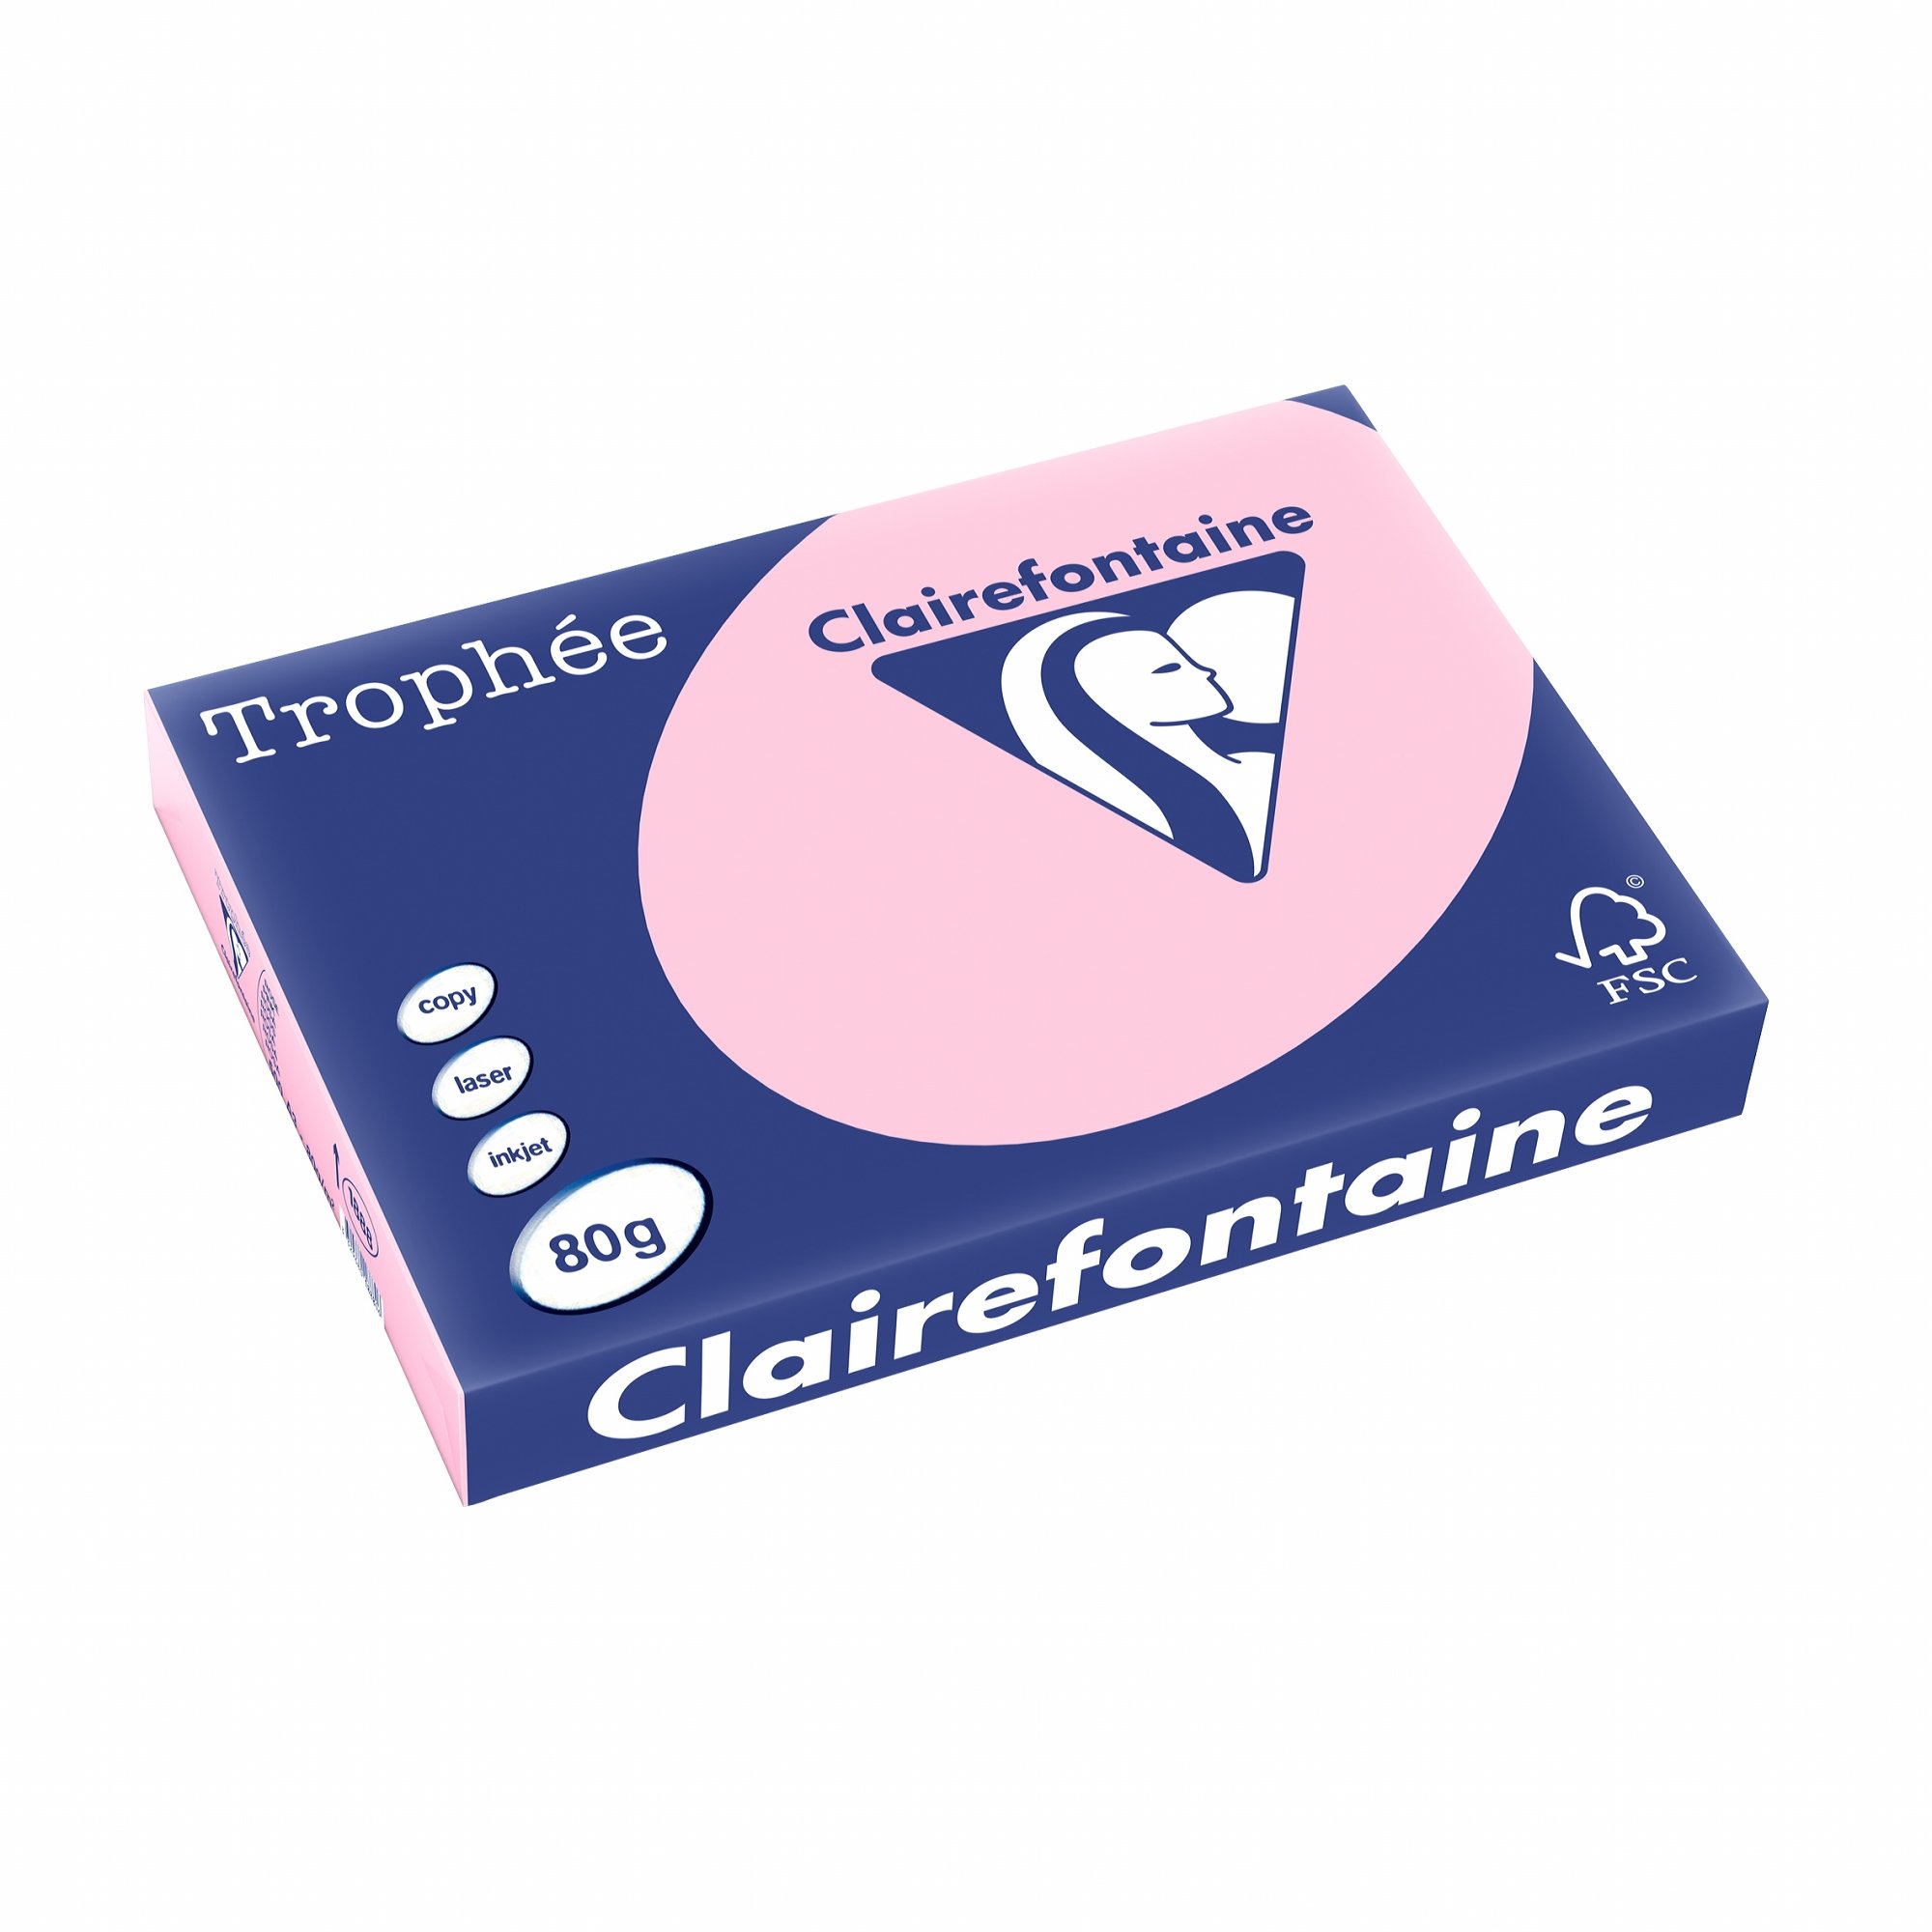 Clairefontaine 1888C - Ries Druckerpapier / Kopierpapier Trophee, Pastell Farben, DIN A3, 80g, 500 Blatt, Rosa, 1 Ries